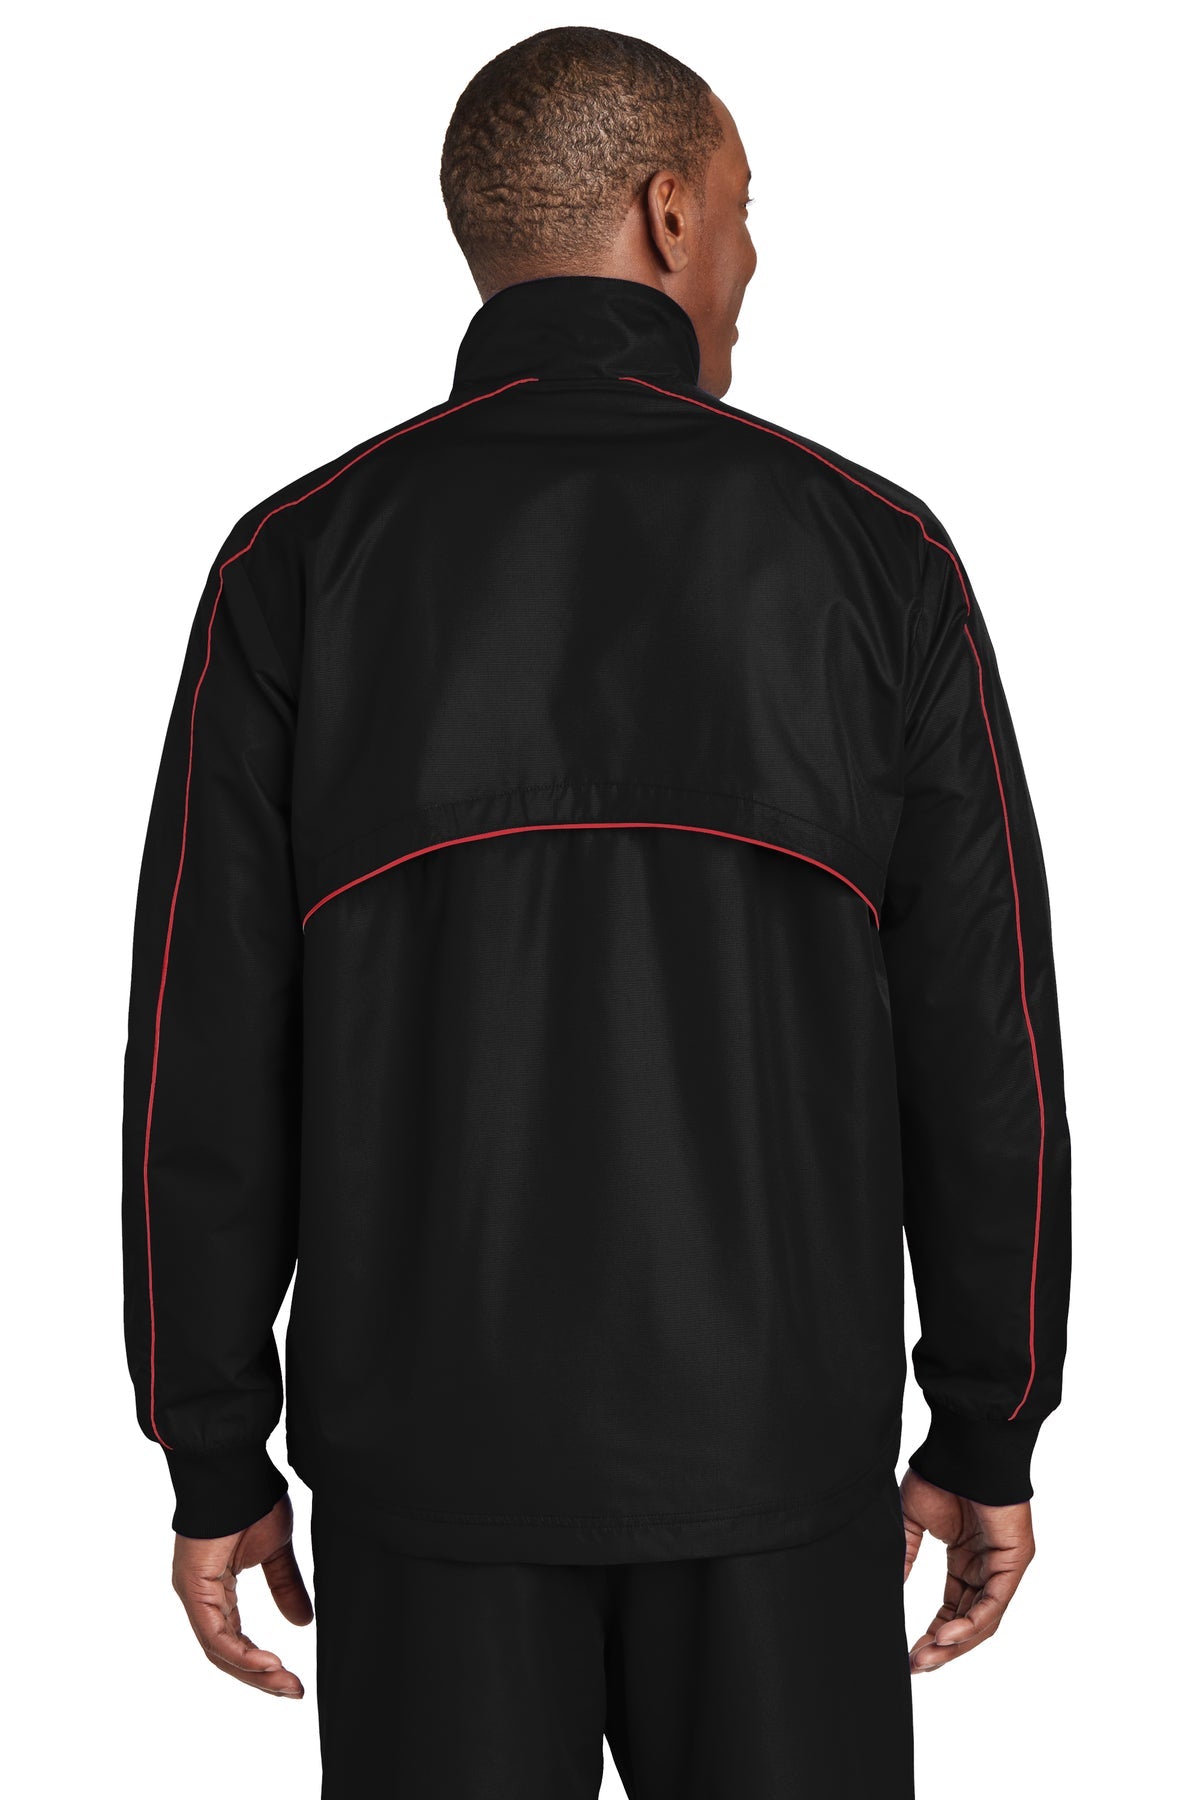 sport-tek_jst83 _black/ true red_company_logo_jackets